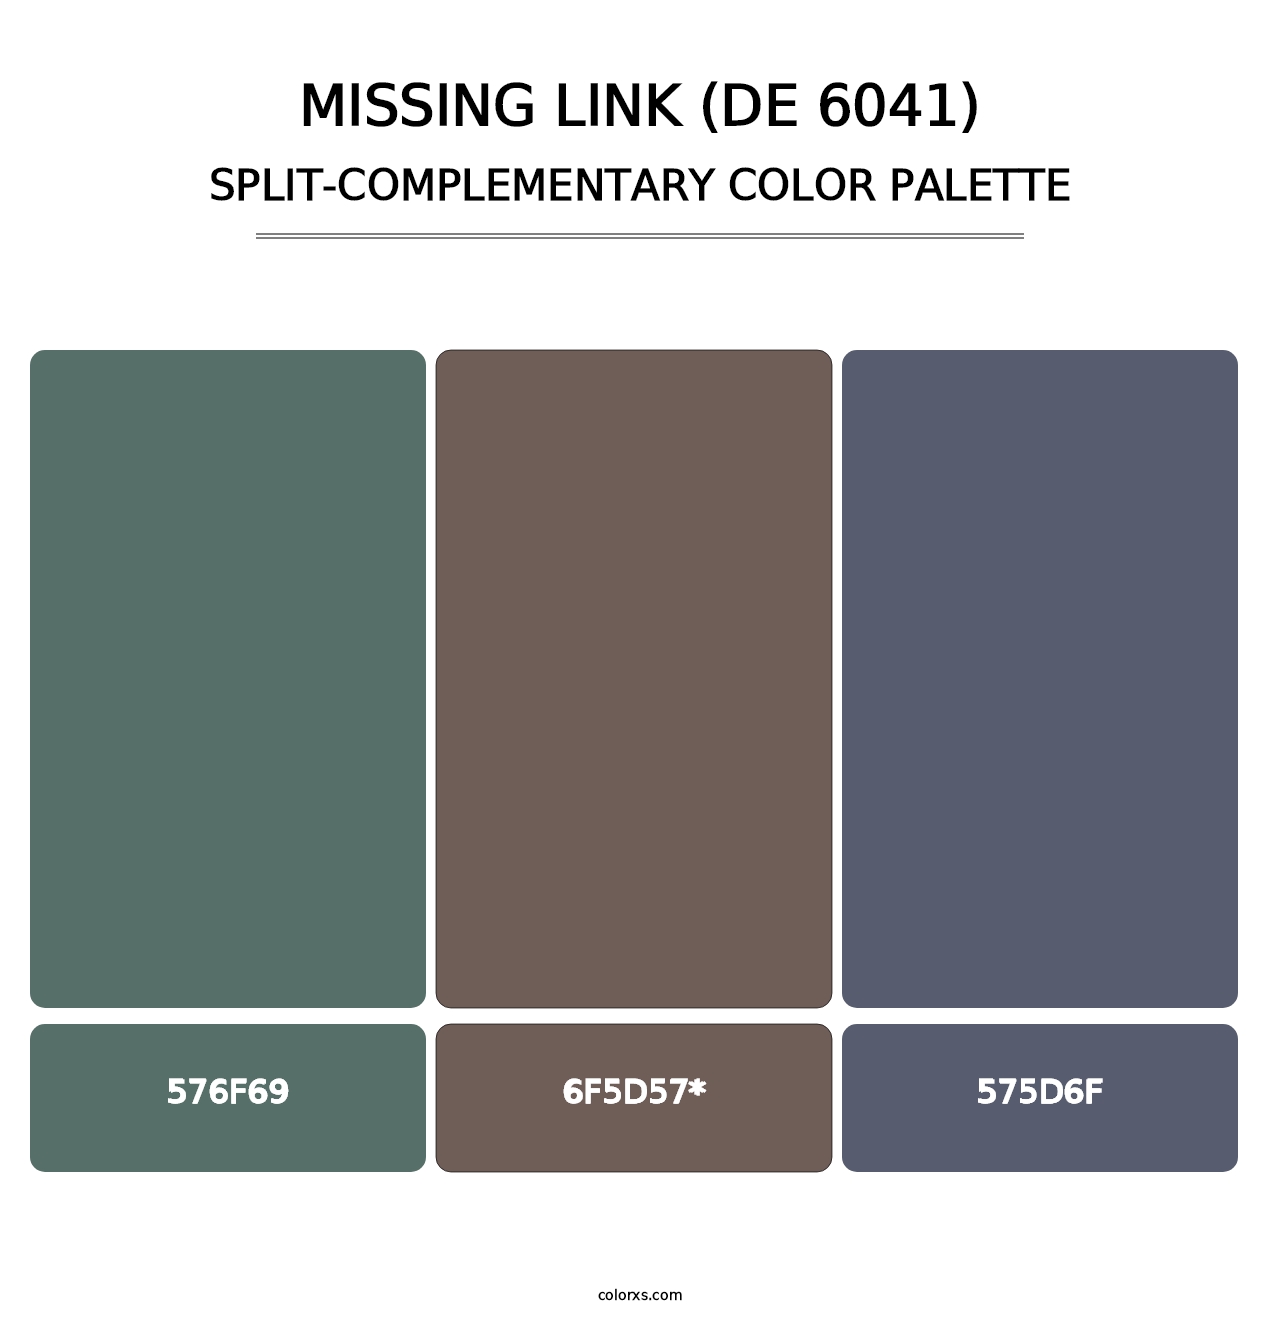 Missing Link (DE 6041) - Split-Complementary Color Palette